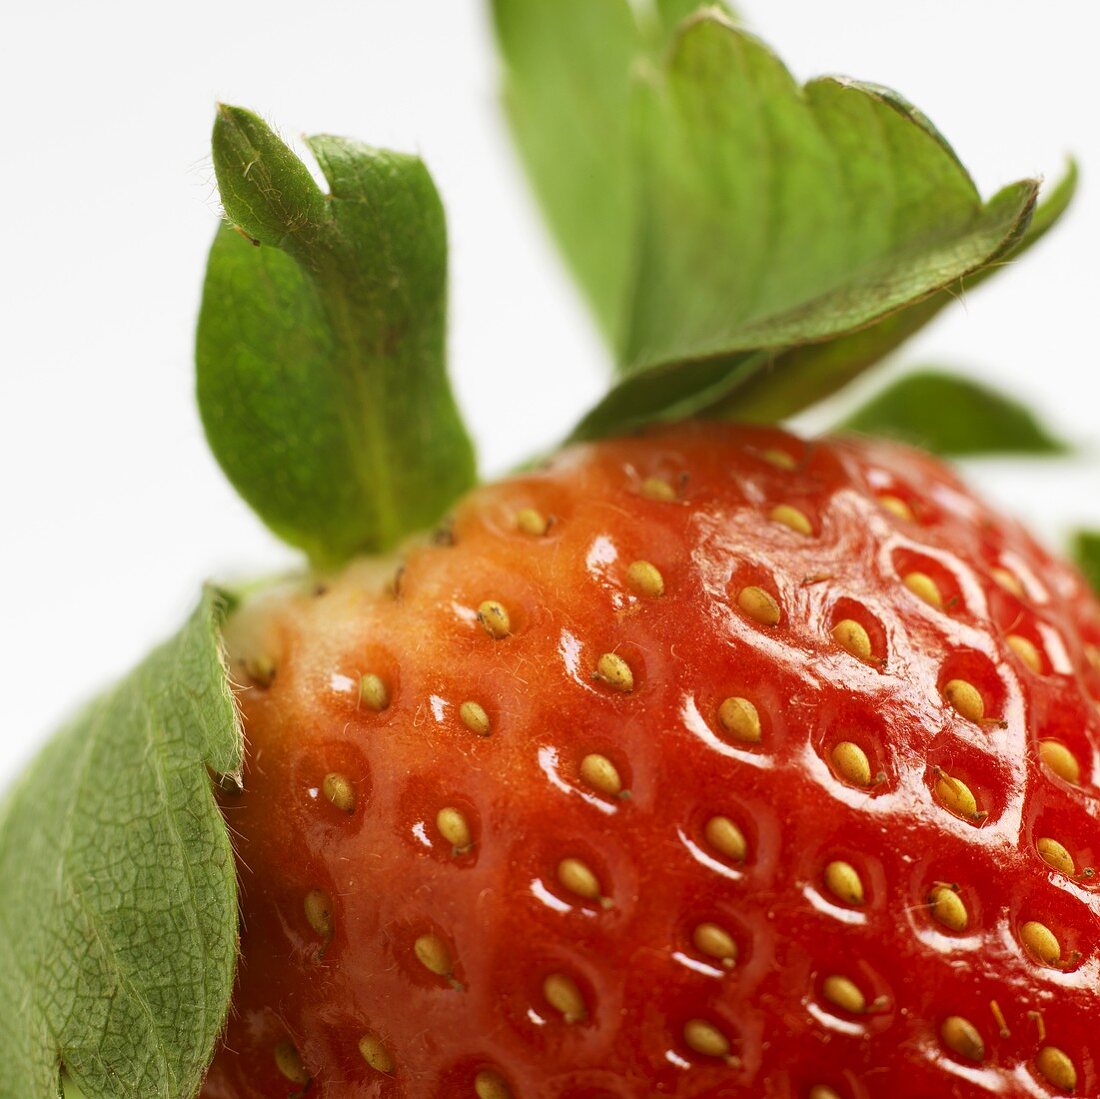 A strawberry, detail